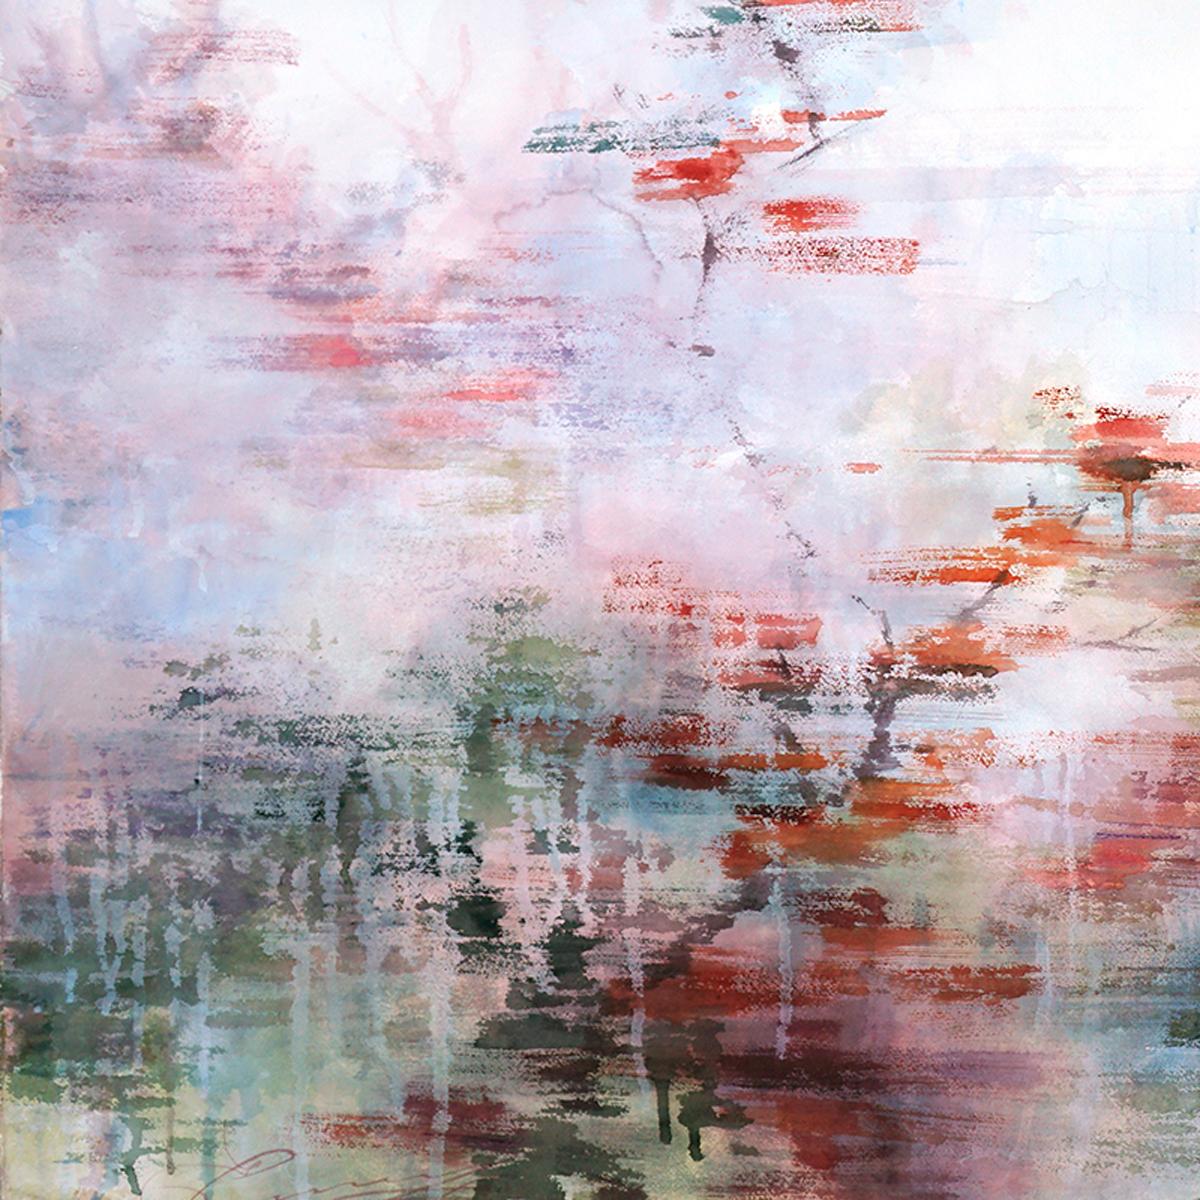 Autumn Lake - 21st Century, Contemporary, Landscape, Watercolor on Paper - Painting by Ekaterina Smirnova